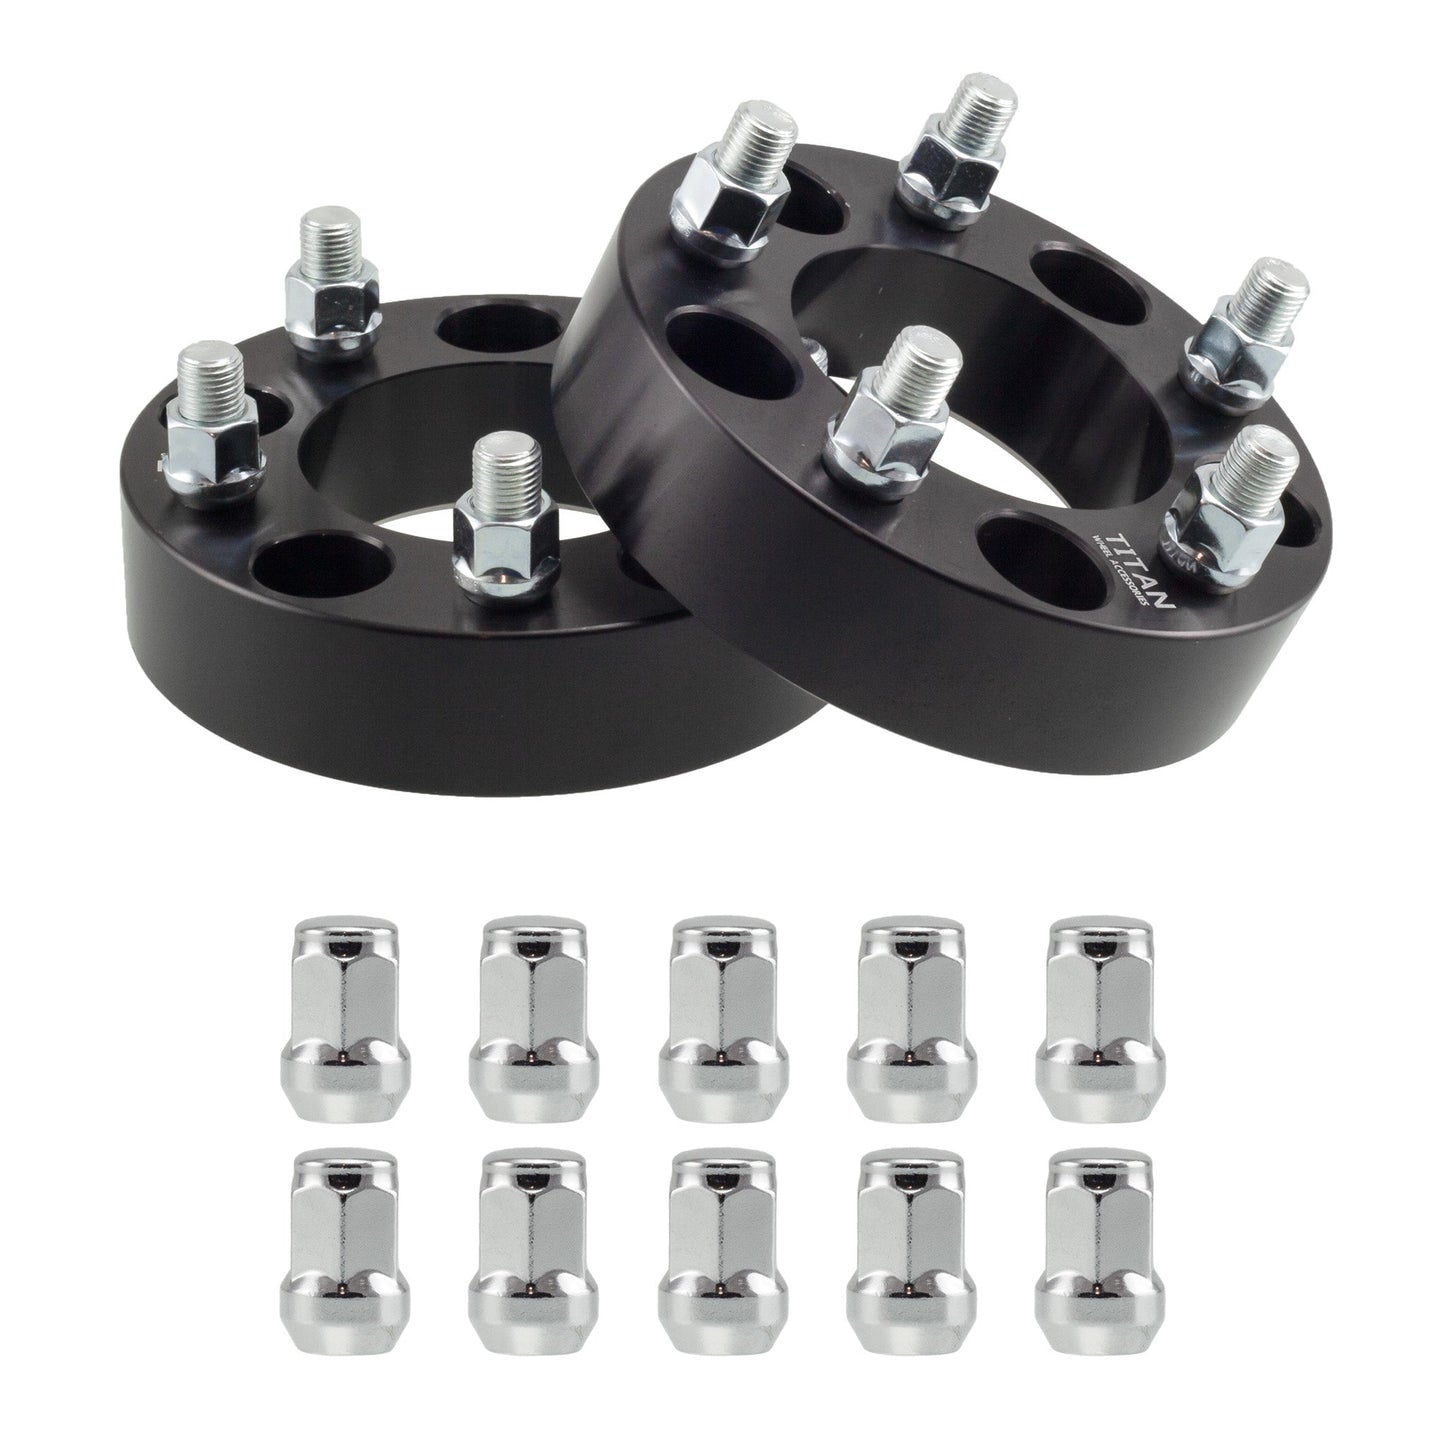 25mm (1") Titan 5x100 to 5x112 Wheel Adapters for VW Audi | 57.1 Hubcentric | 12x1.5 Studs | Titan Wheel Accessories